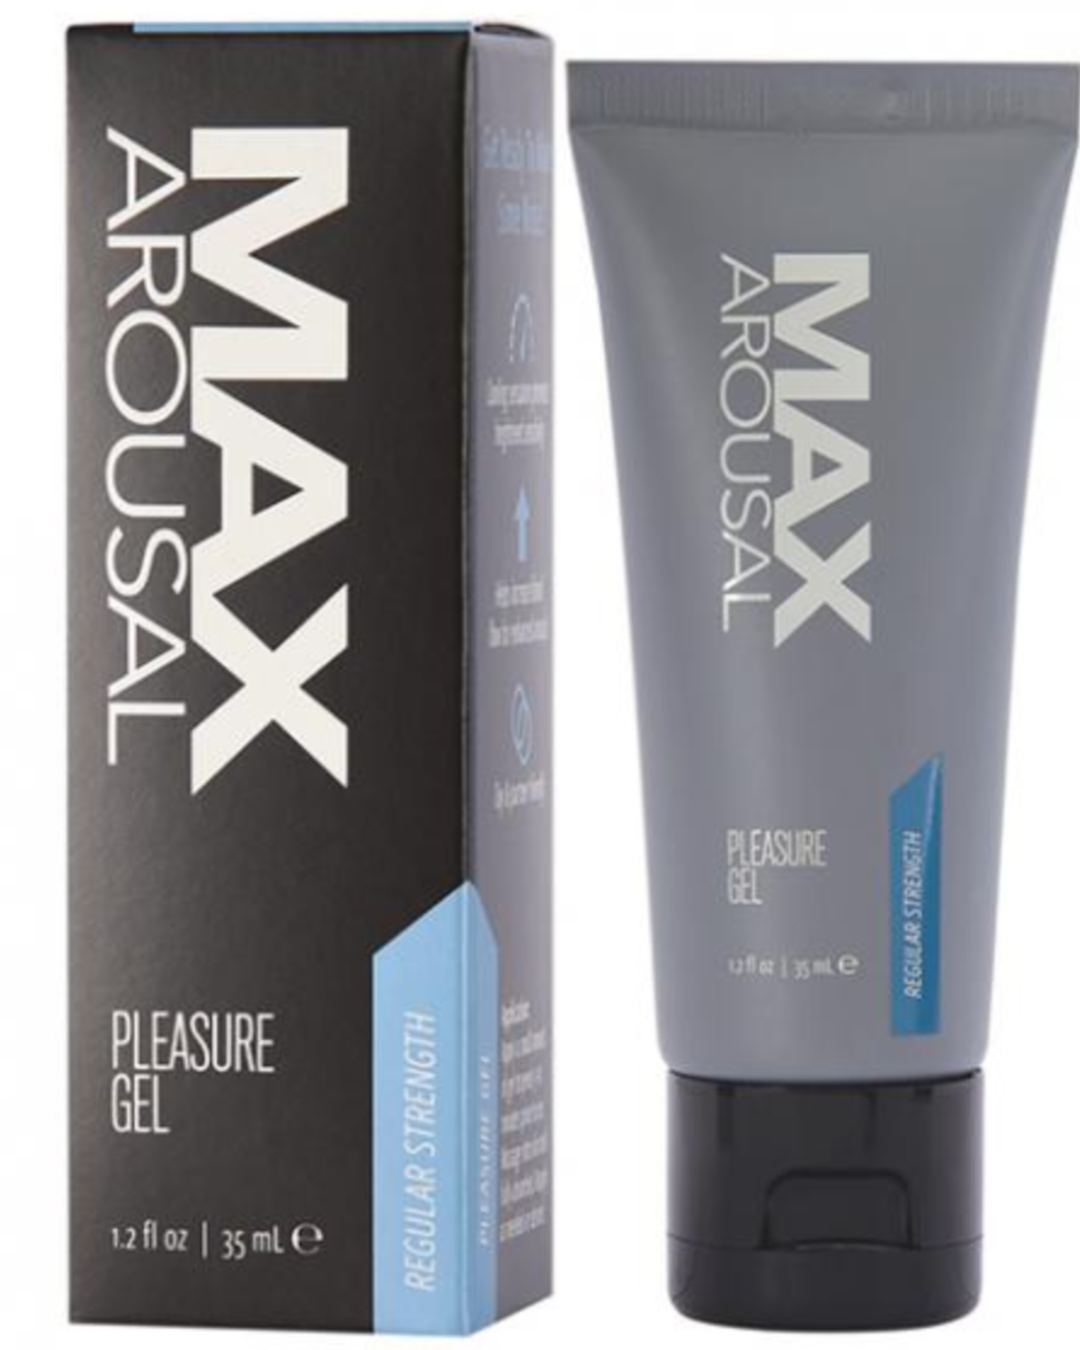 Max Vitality Stamina Treatment Cream - 3 oz box and product tube 